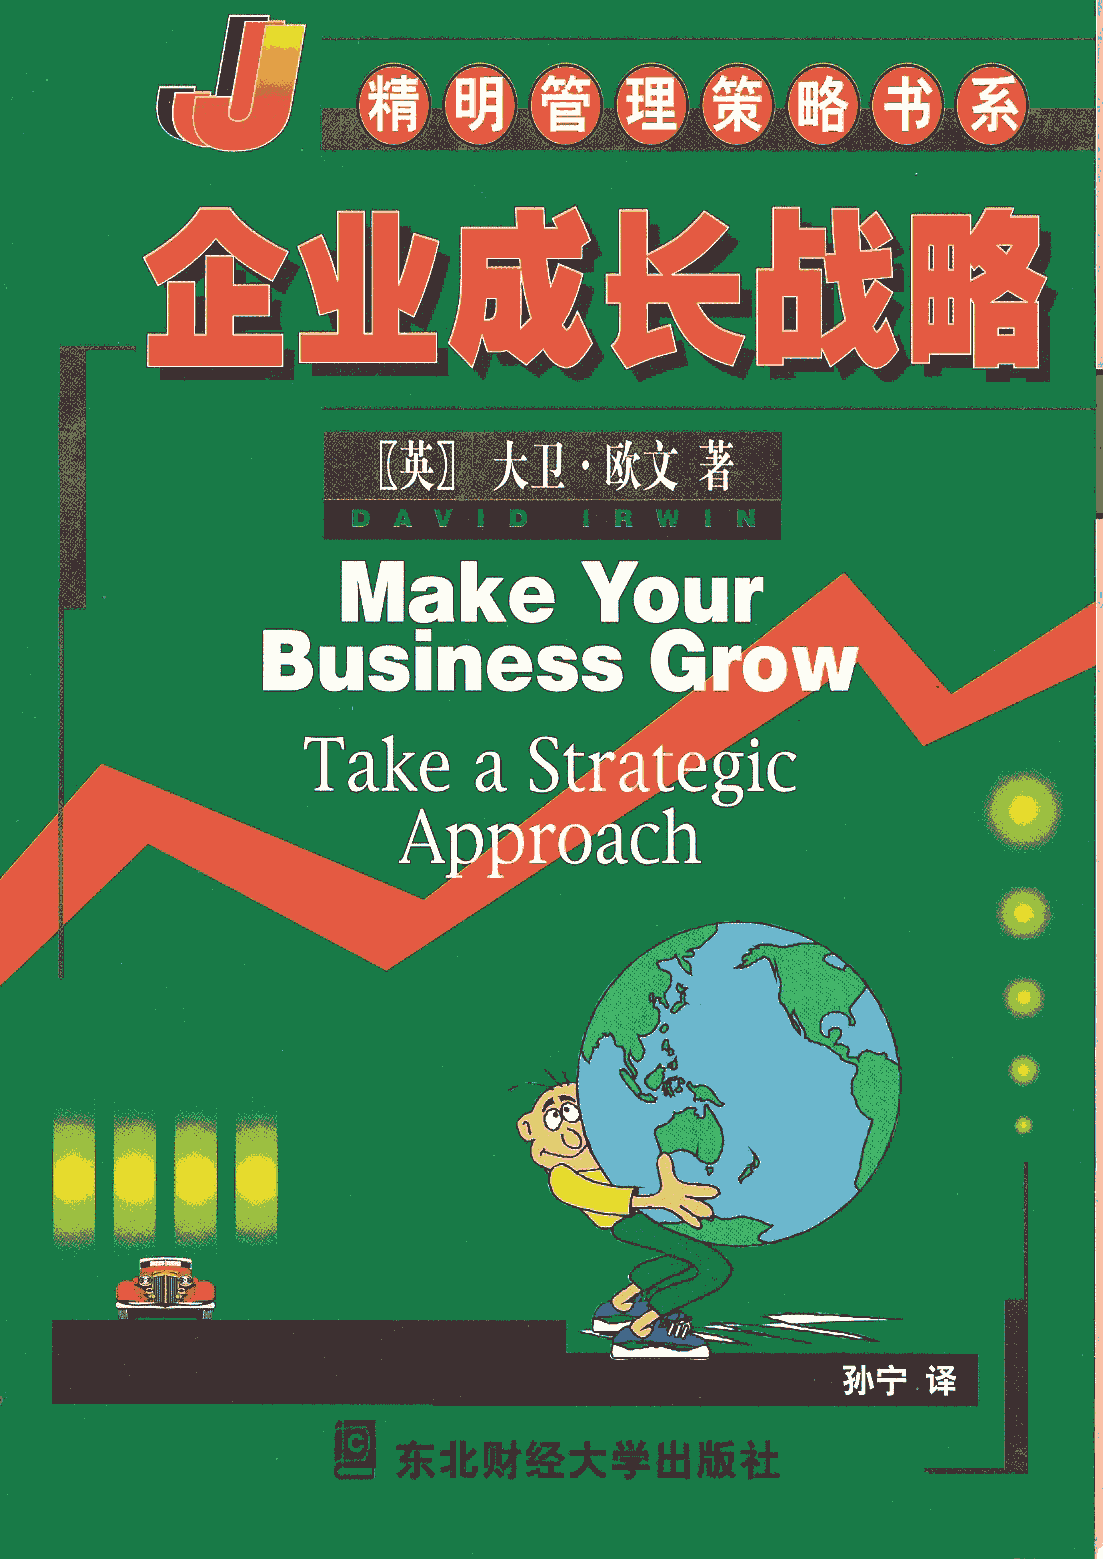 MYBG Chinese version